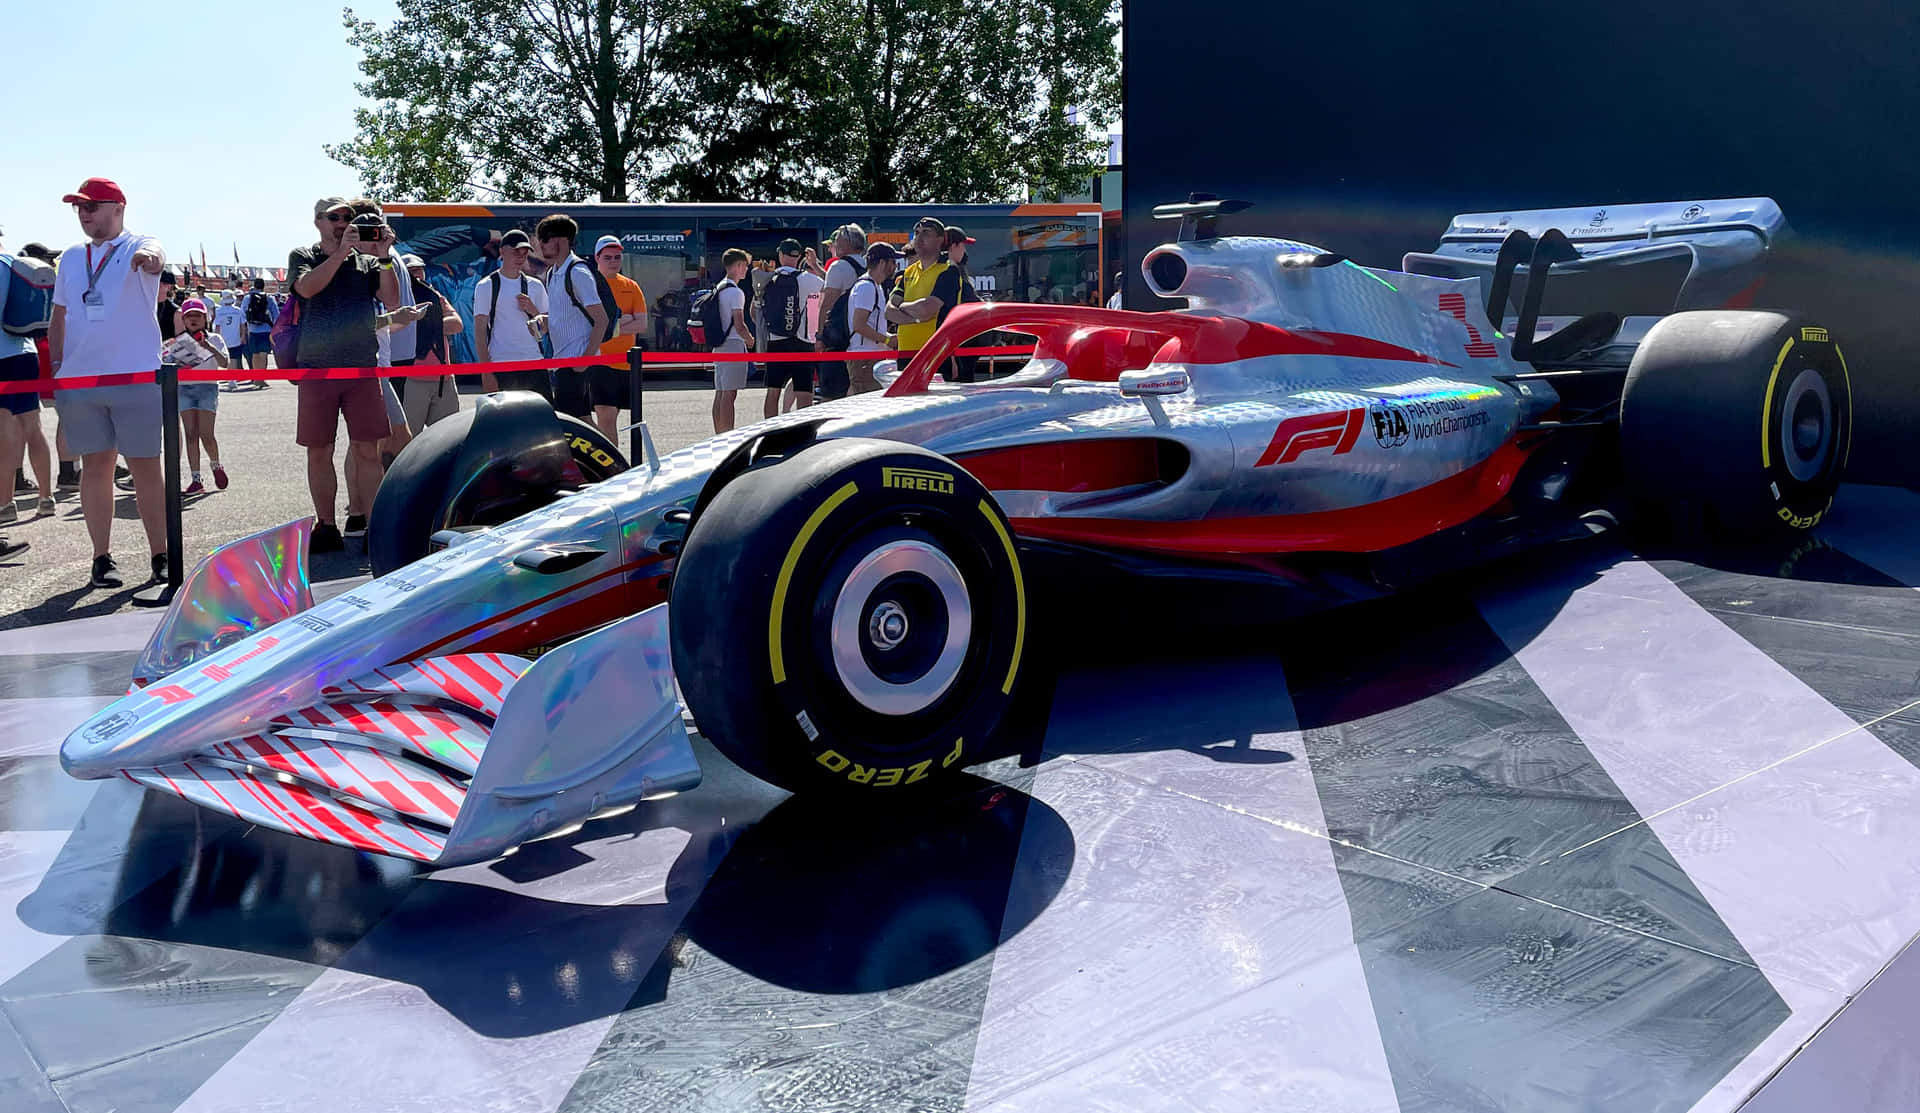 Formula1 Race Car Displayat Event.jpg Wallpaper